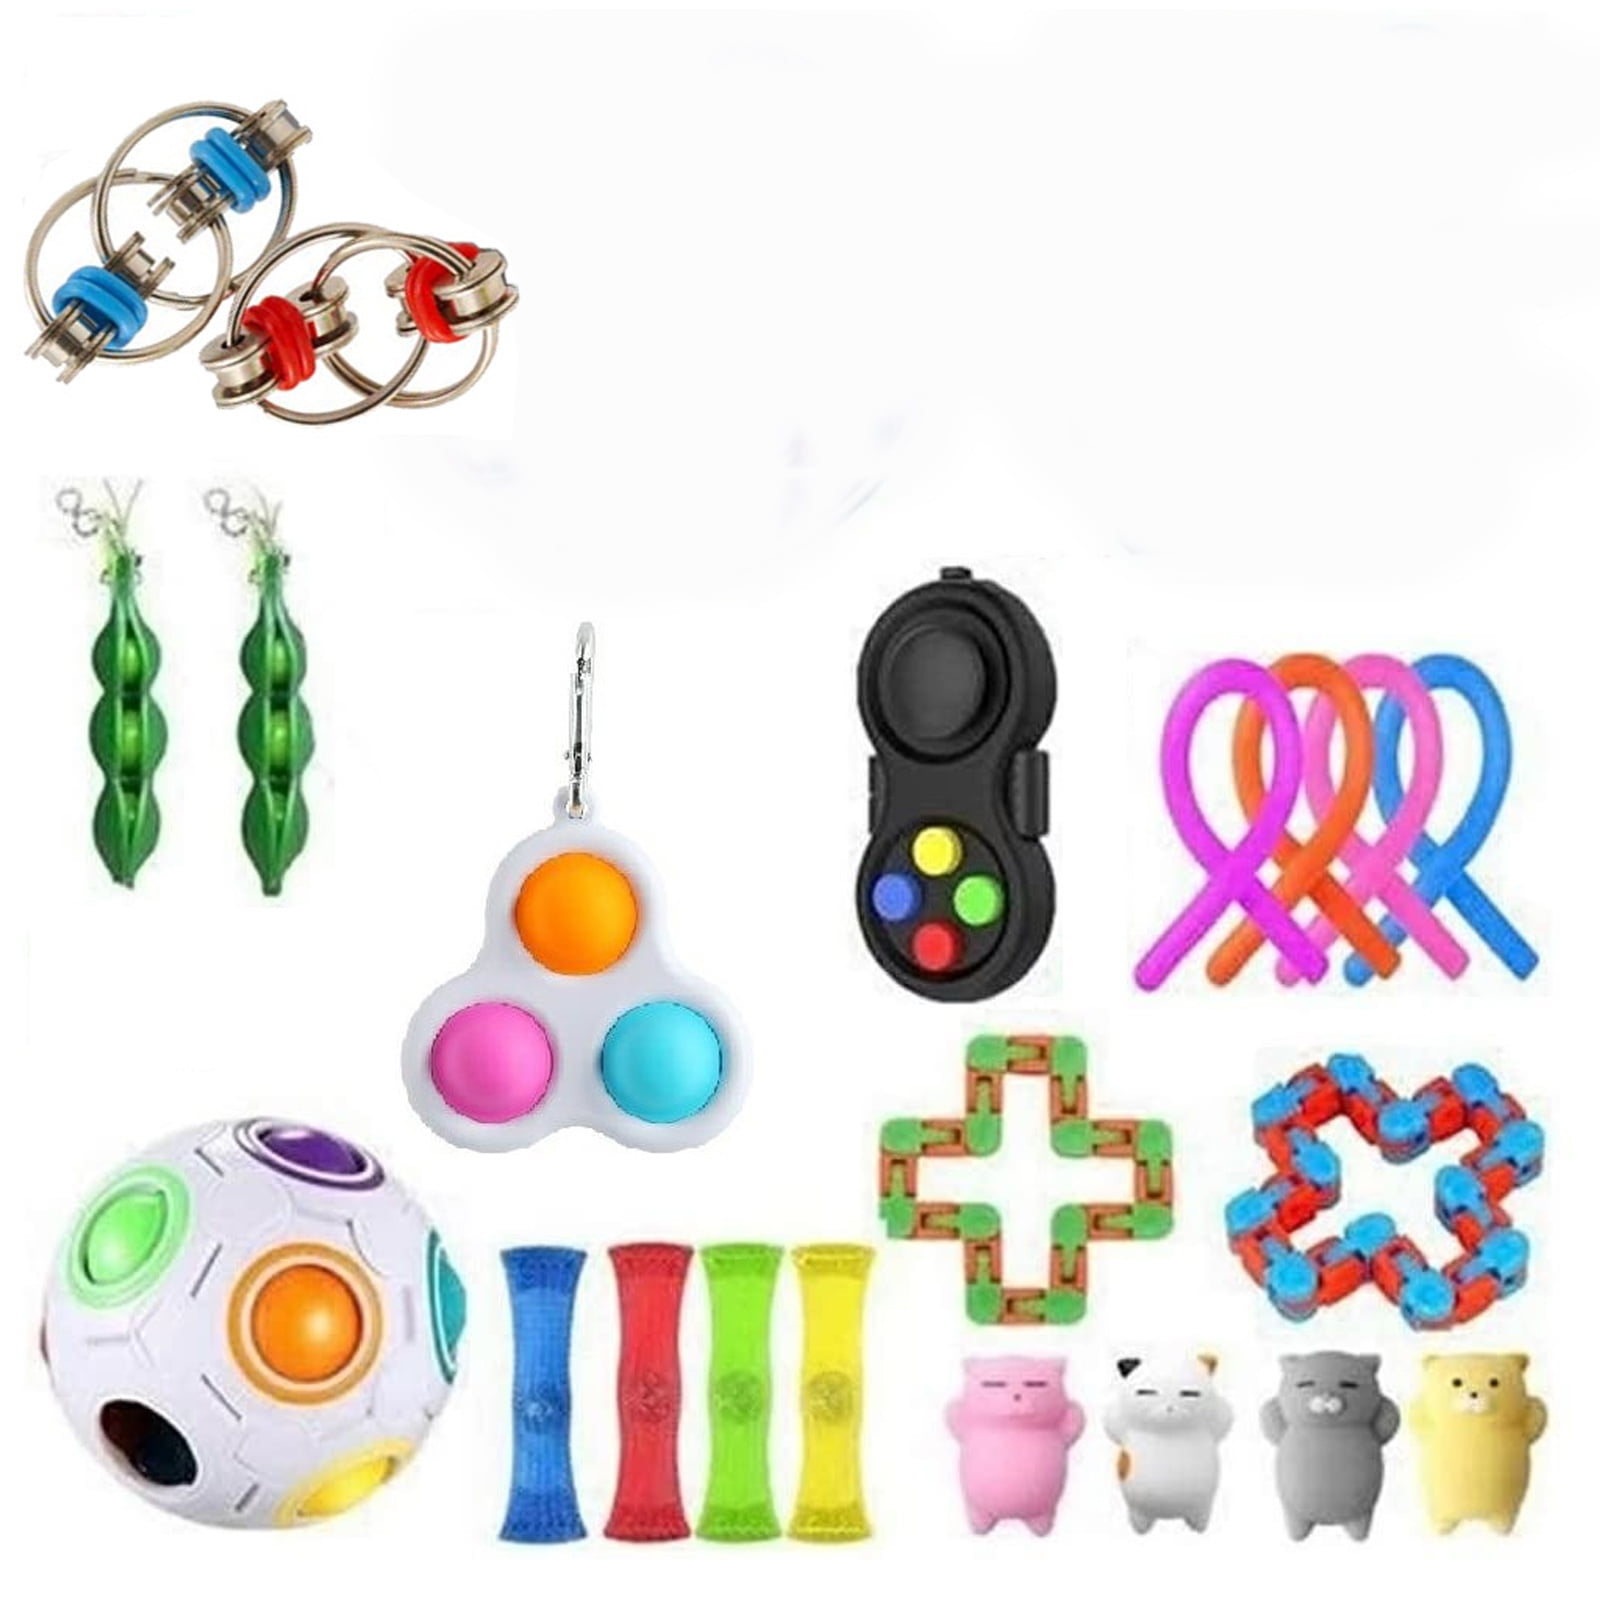 Fidget Toys for Stress Relief 17 pc Bundle/Set #2 Kids & Adult Swagbundle 